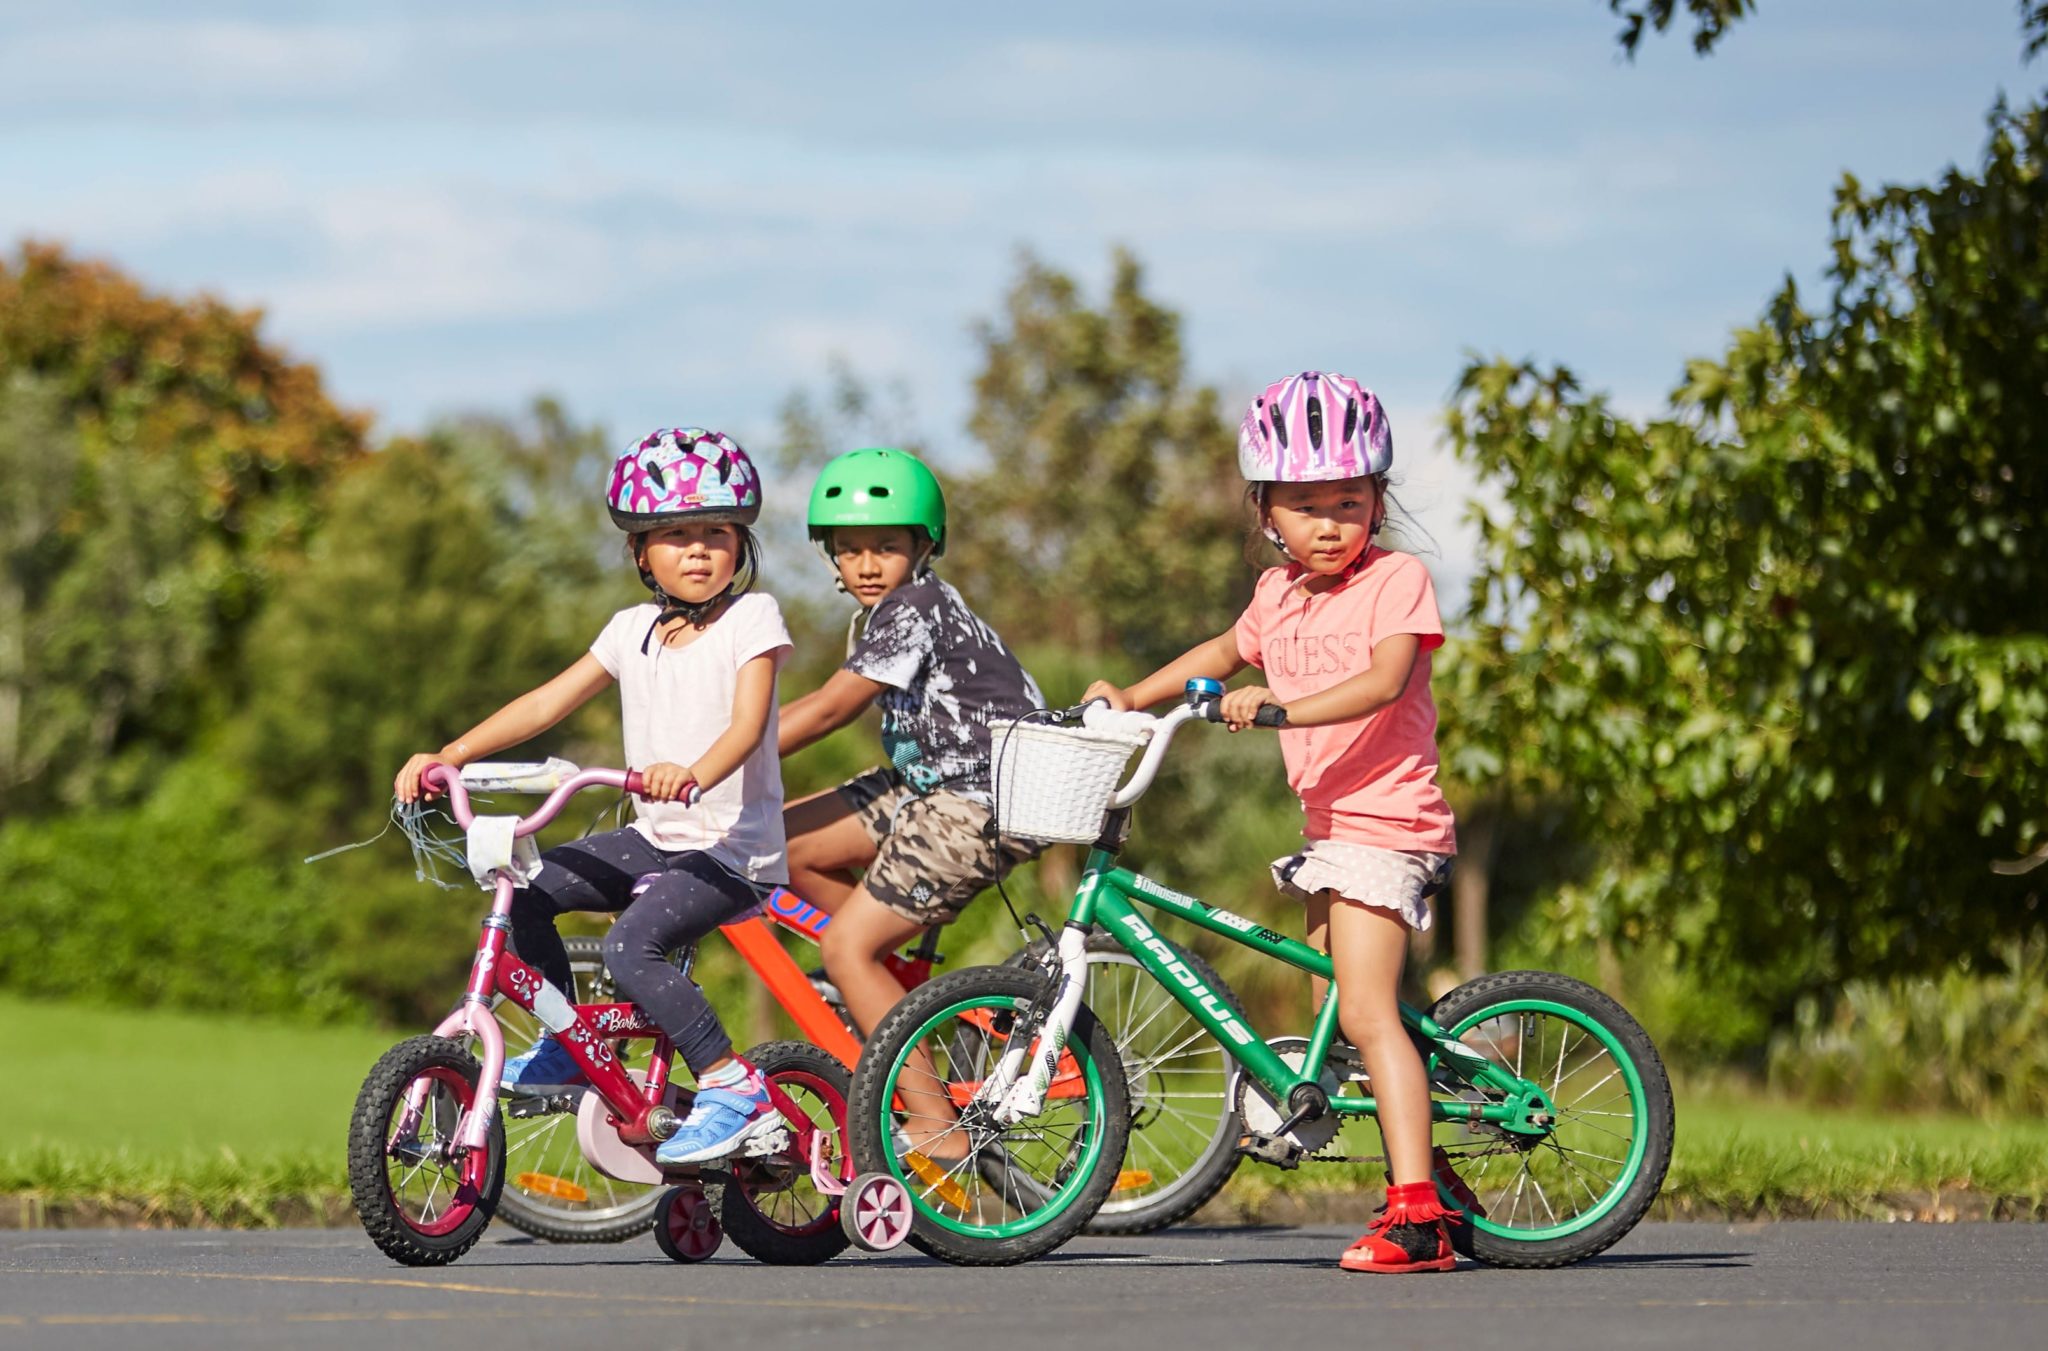 Ride their bikes. Children riding Bicycles.